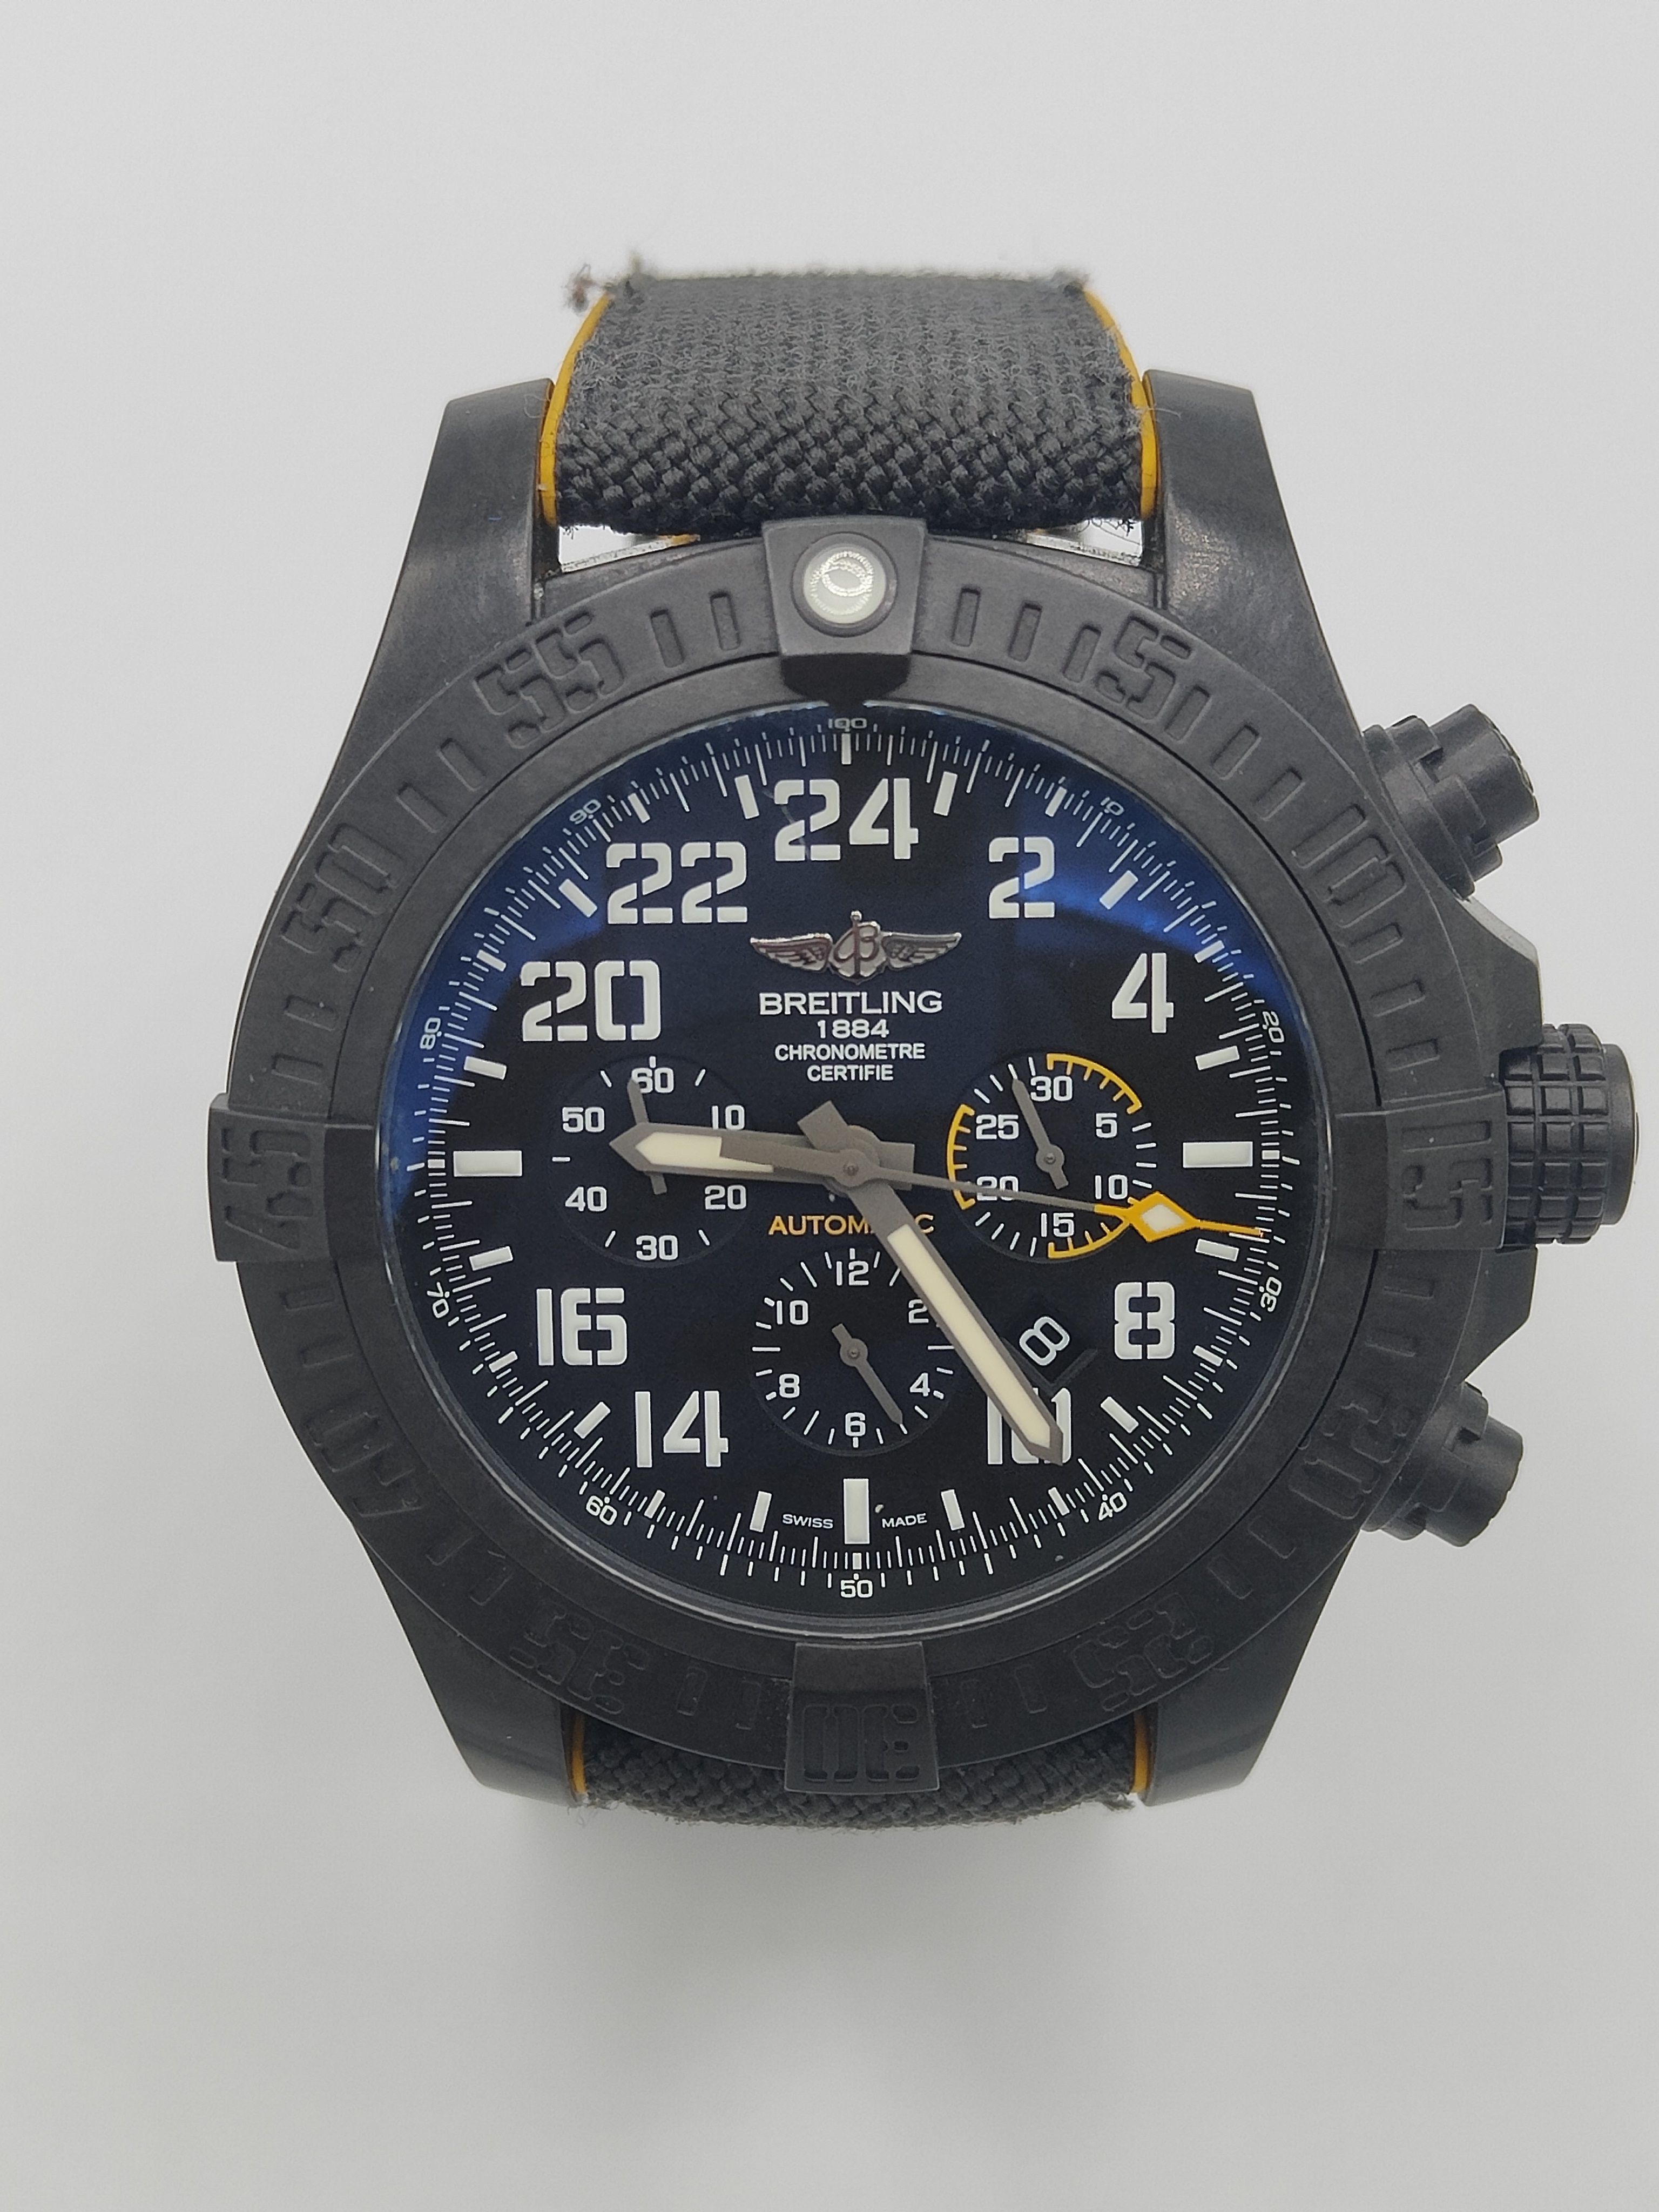 Breitling Avenger Hurricane Watch - Image 4 of 11